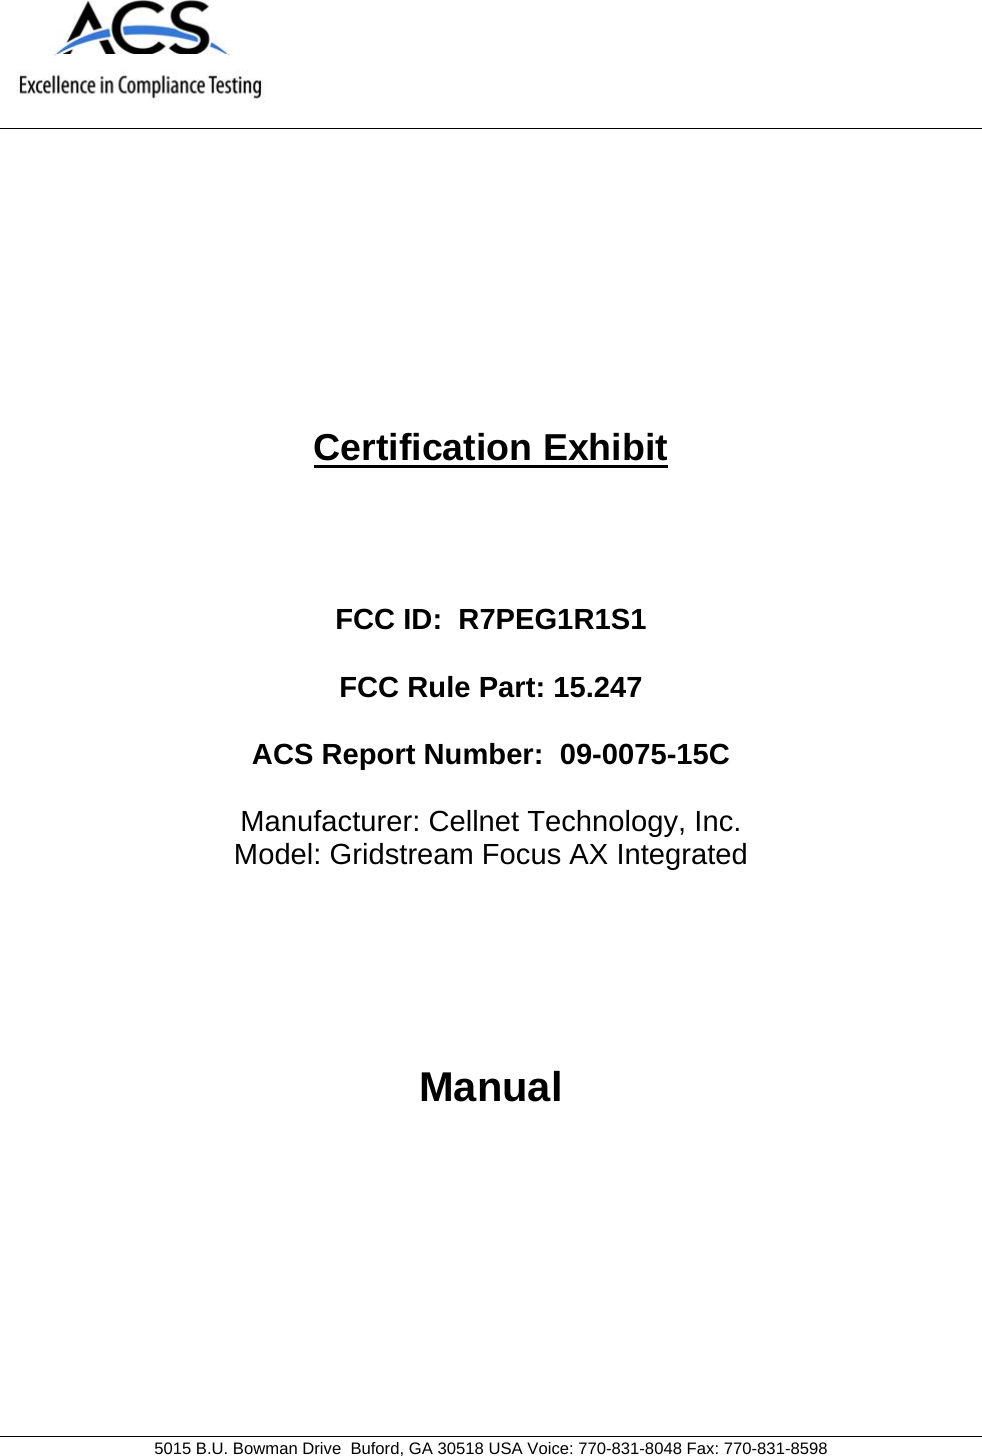     5015 B.U. Bowman Drive  Buford, GA 30518 USA Voice: 770-831-8048 Fax: 770-831-8598   Certification Exhibit     FCC ID:  R7PEG1R1S1  FCC Rule Part: 15.247  ACS Report Number:  09-0075-15C   Manufacturer: Cellnet Technology, Inc. Model: Gridstream Focus AX Integrated     Manual  